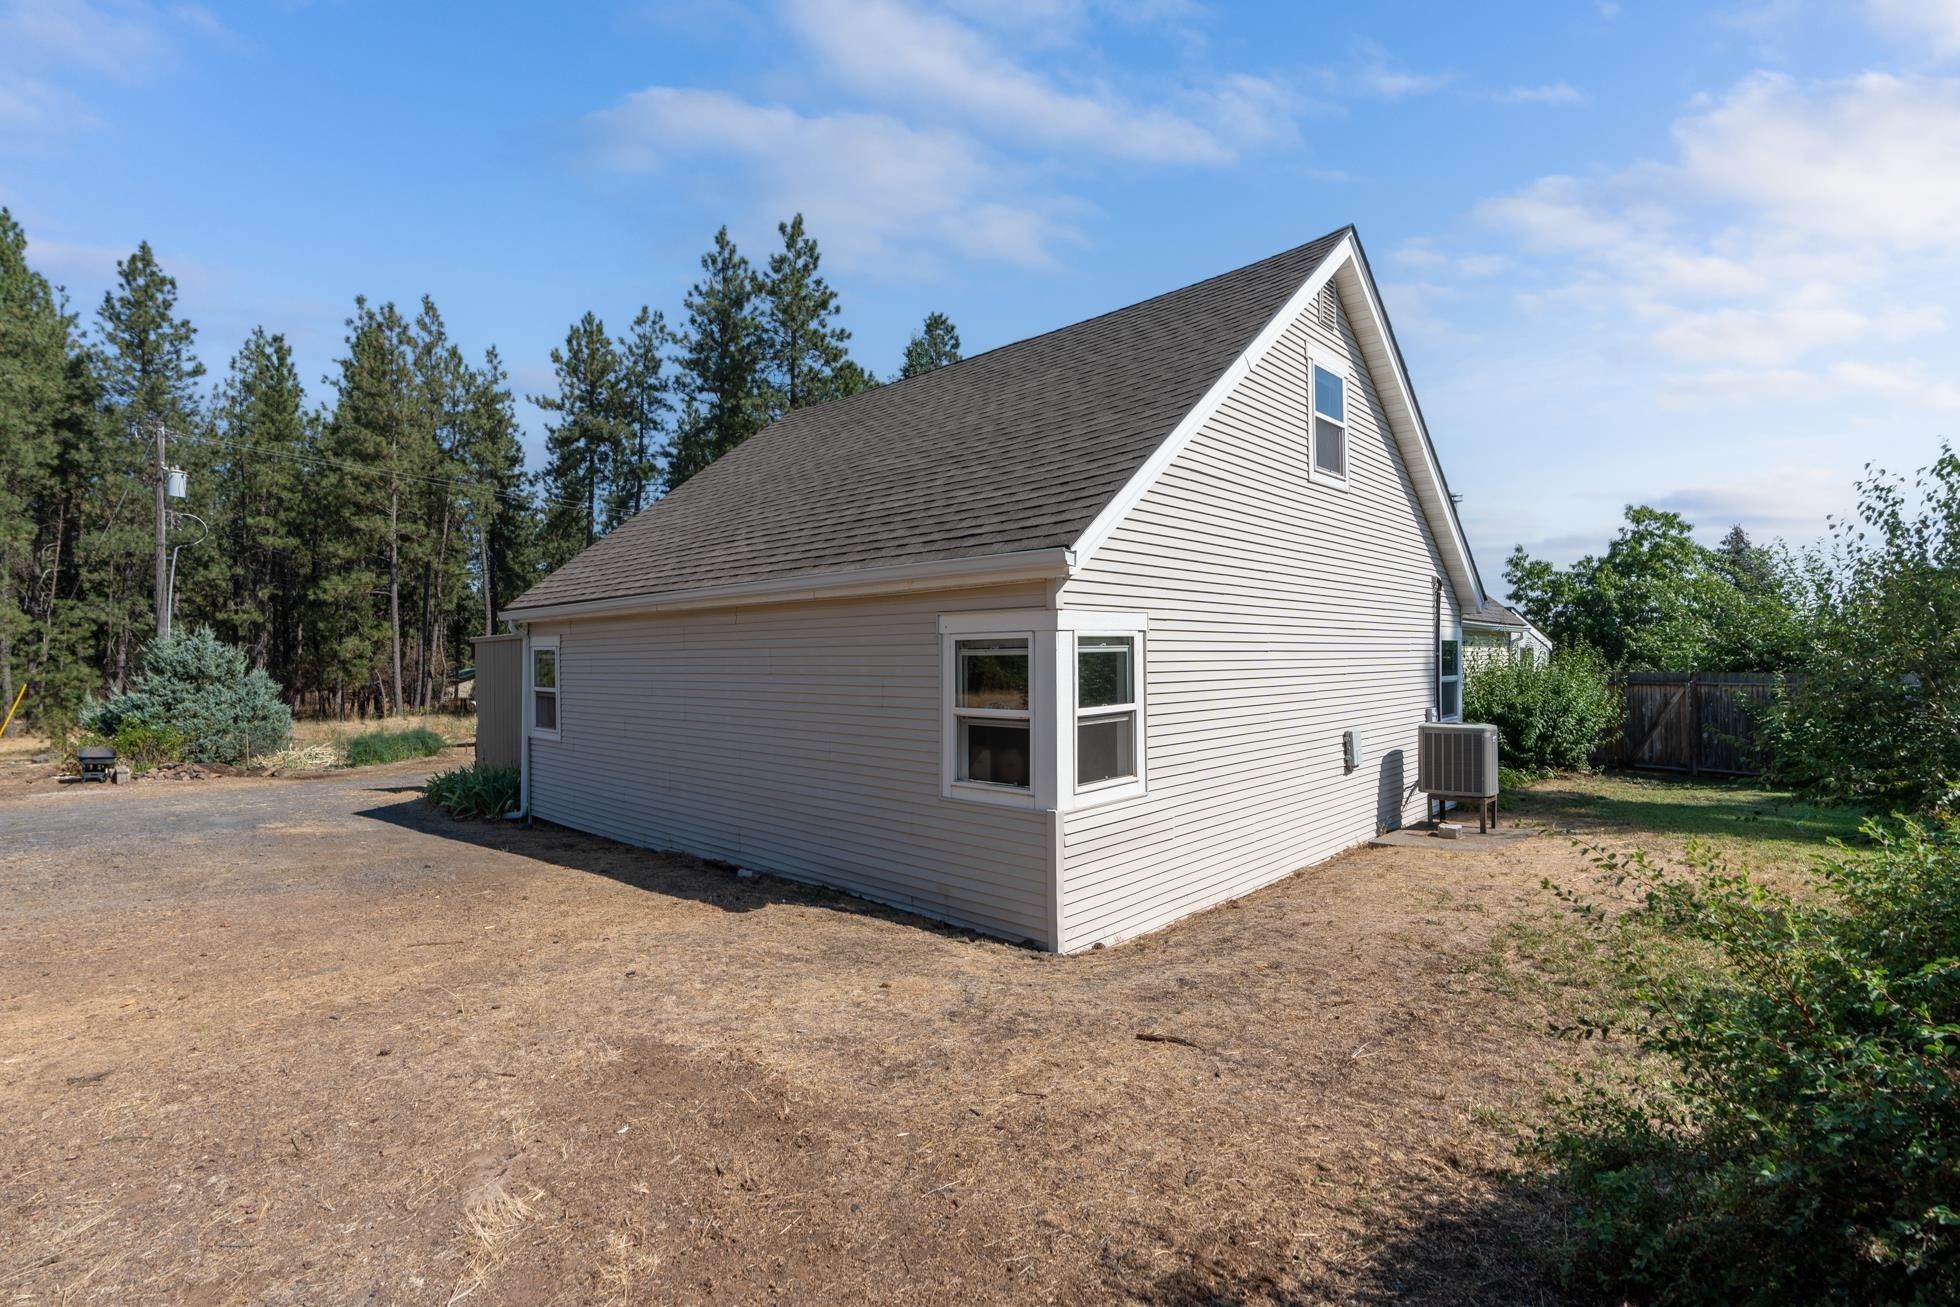 19. Single Family Homes for Sale at 4220 S Dorset Road Spokane, Washington 99224 United States